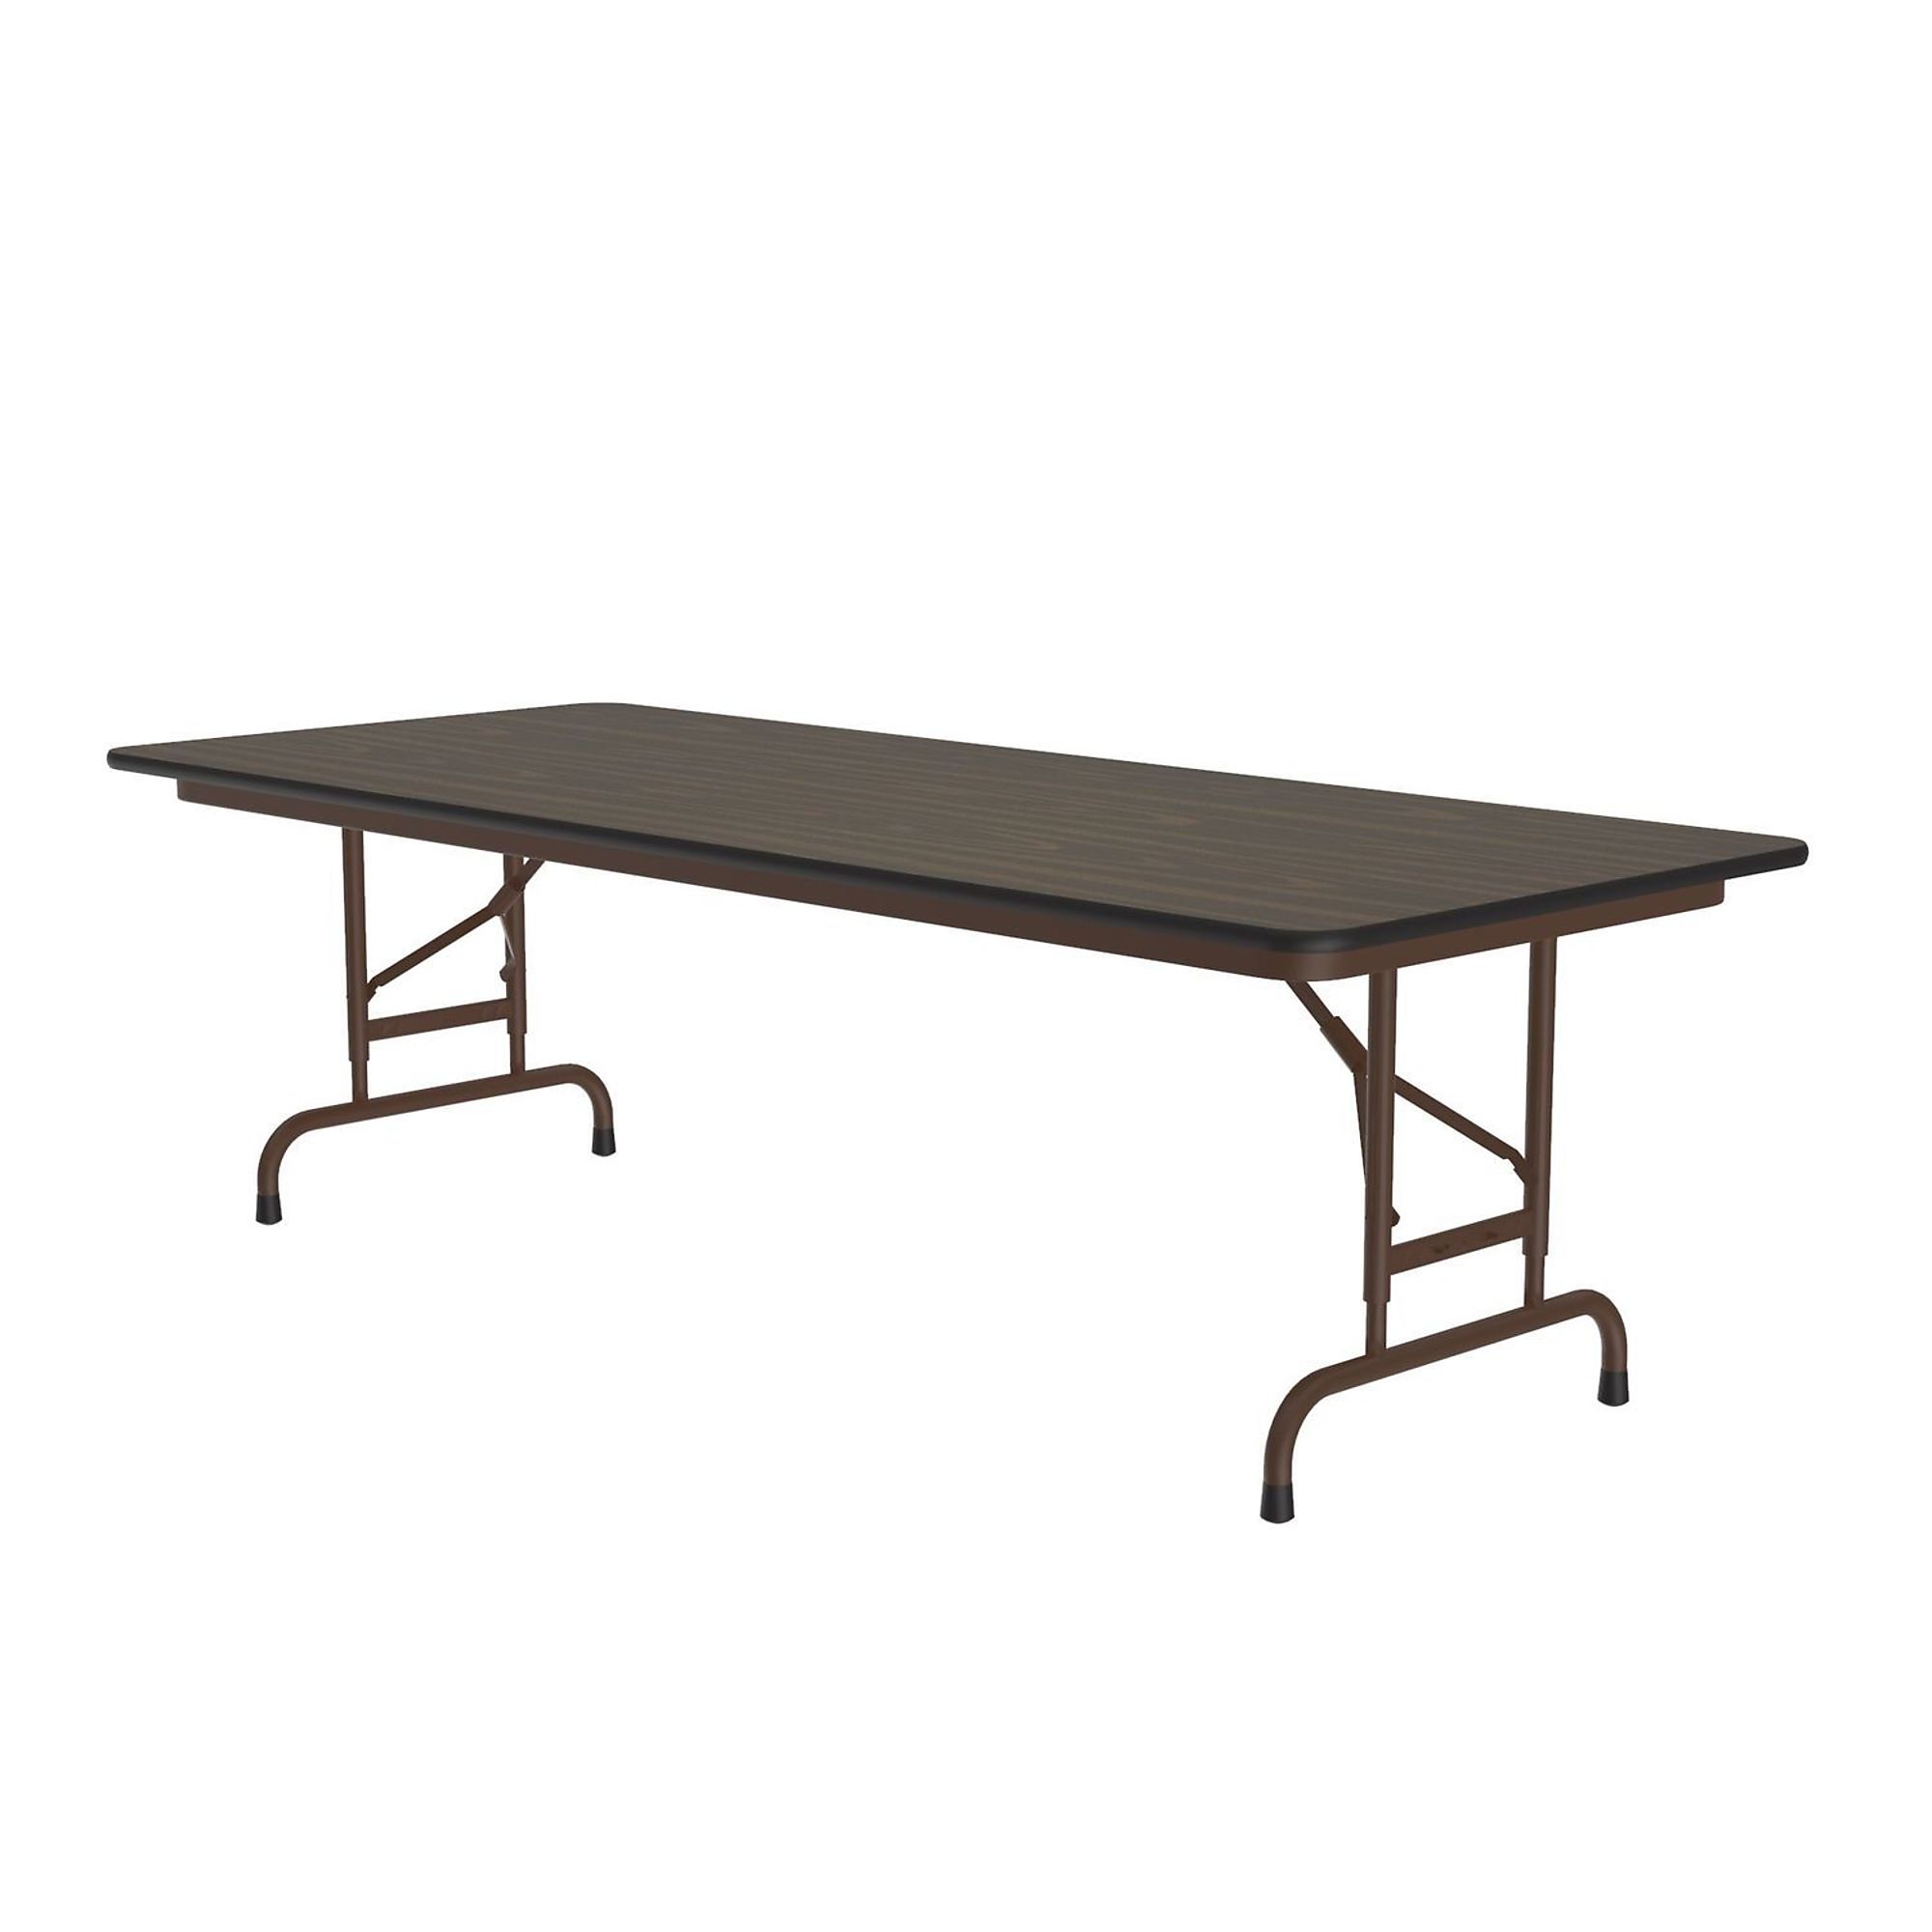 Correll, Adjustable TFL Folding Table, Walnut, 30x96, Height 29 in, Width 30 in, Length 96 in, Model CFA3096TF-01